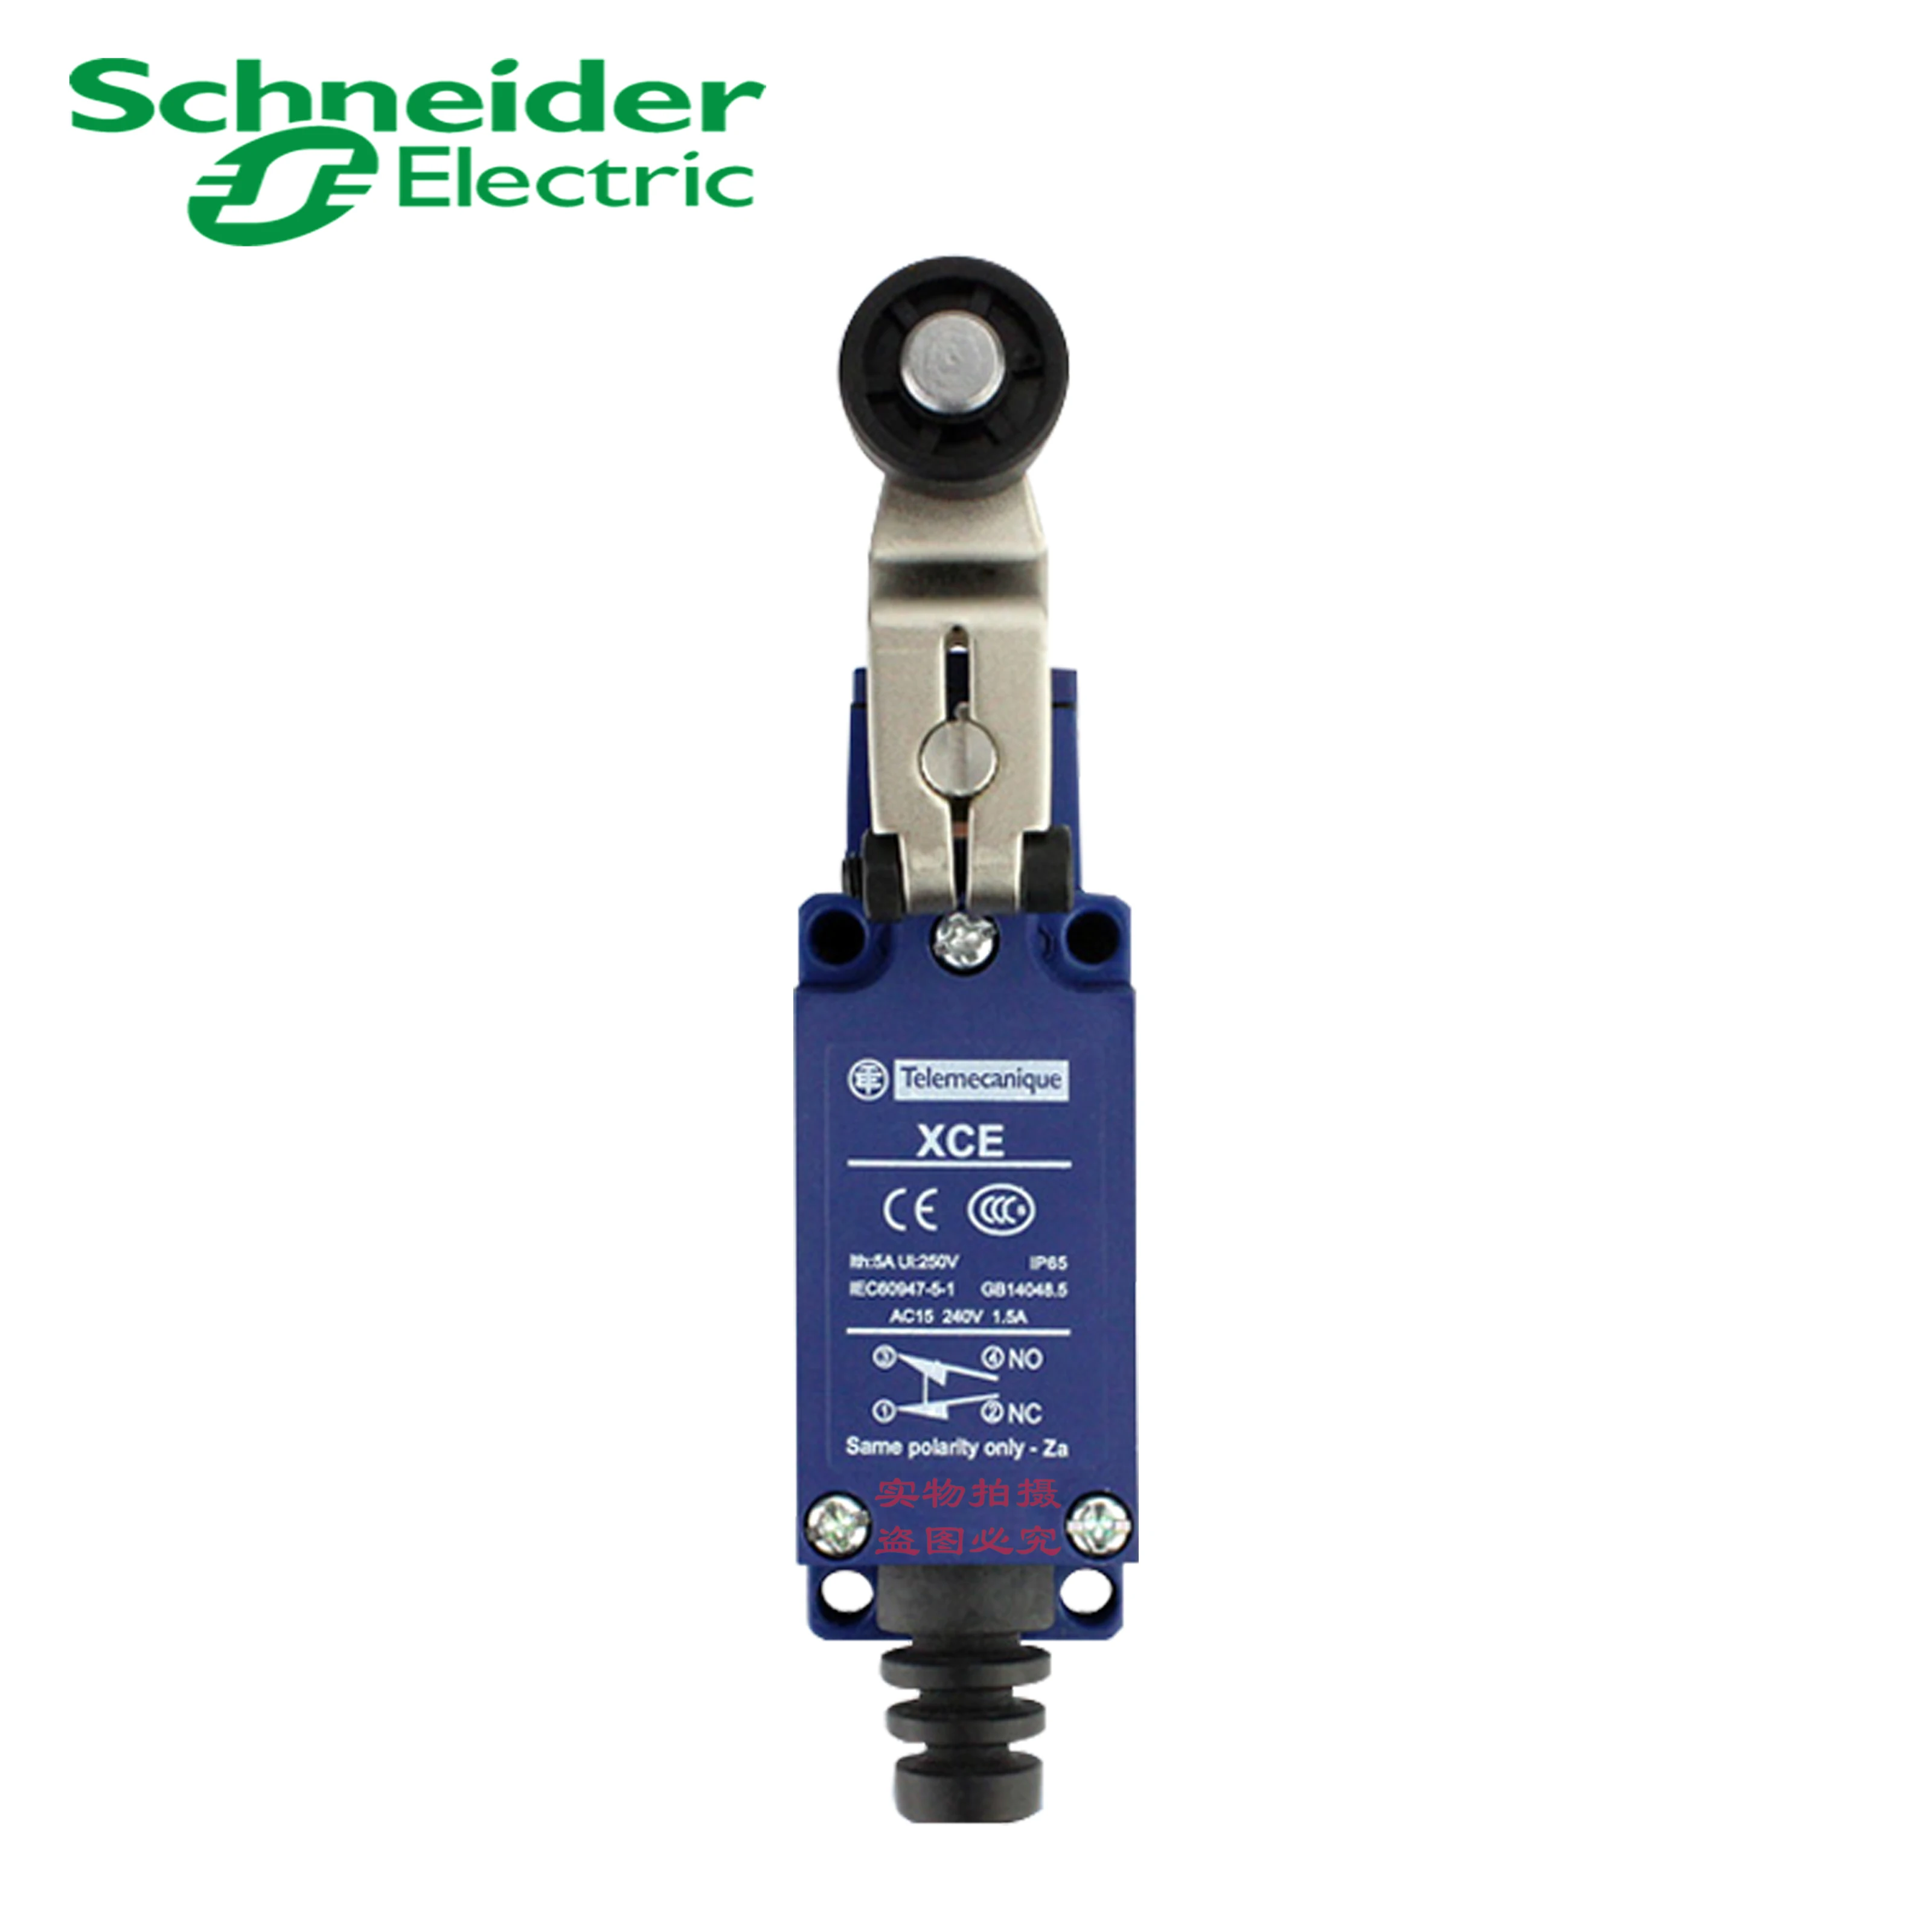 

New Schneider travel switch XCE-145 118 154 181 101 121 106 155 102